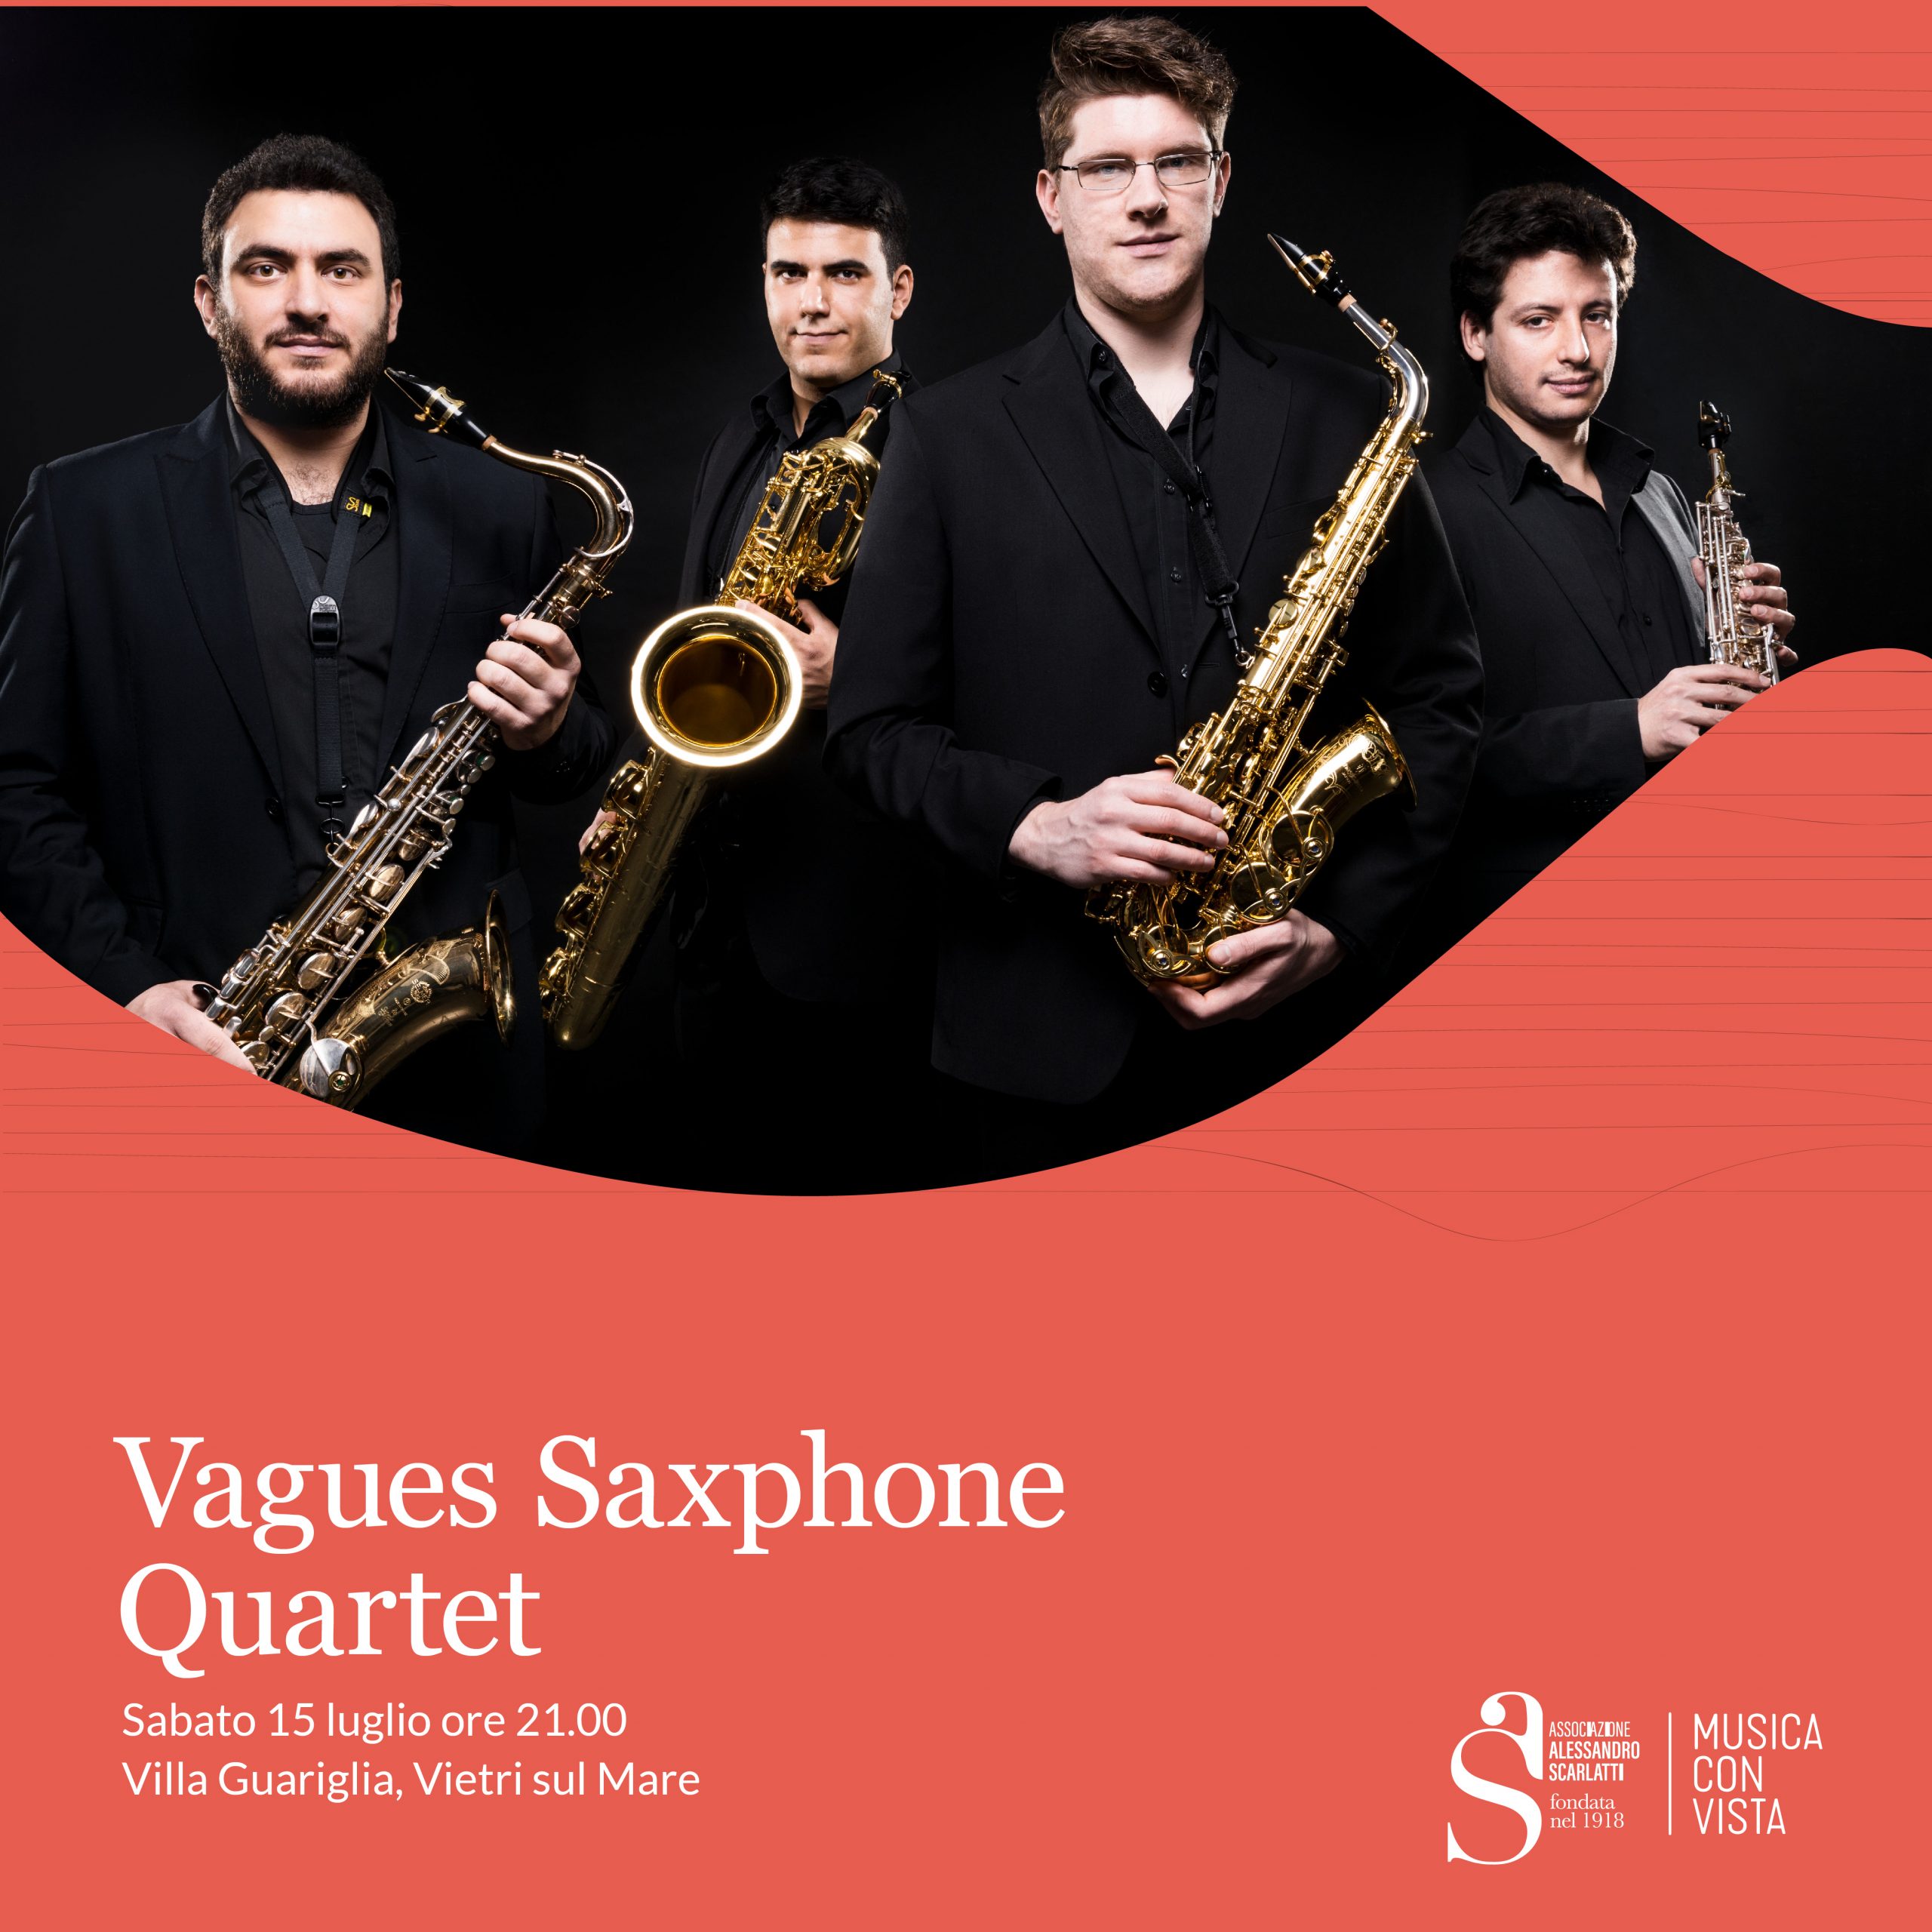 Musica con Vista - Vagues Saxophone Quartet - Associazione Scarlatti